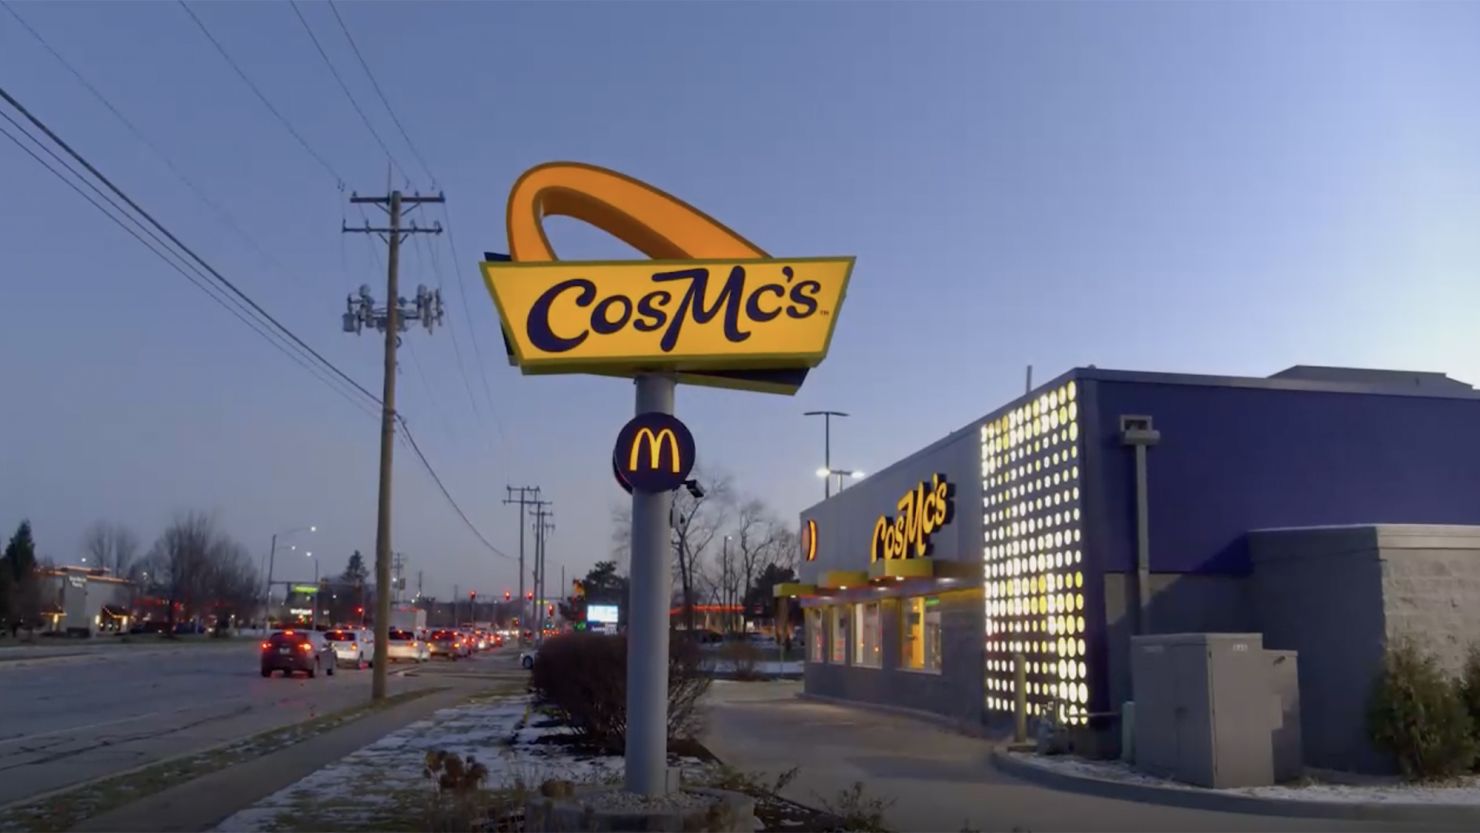 McDonald's starts testing CosMc’s in Bolingbrook, Illinois this week.